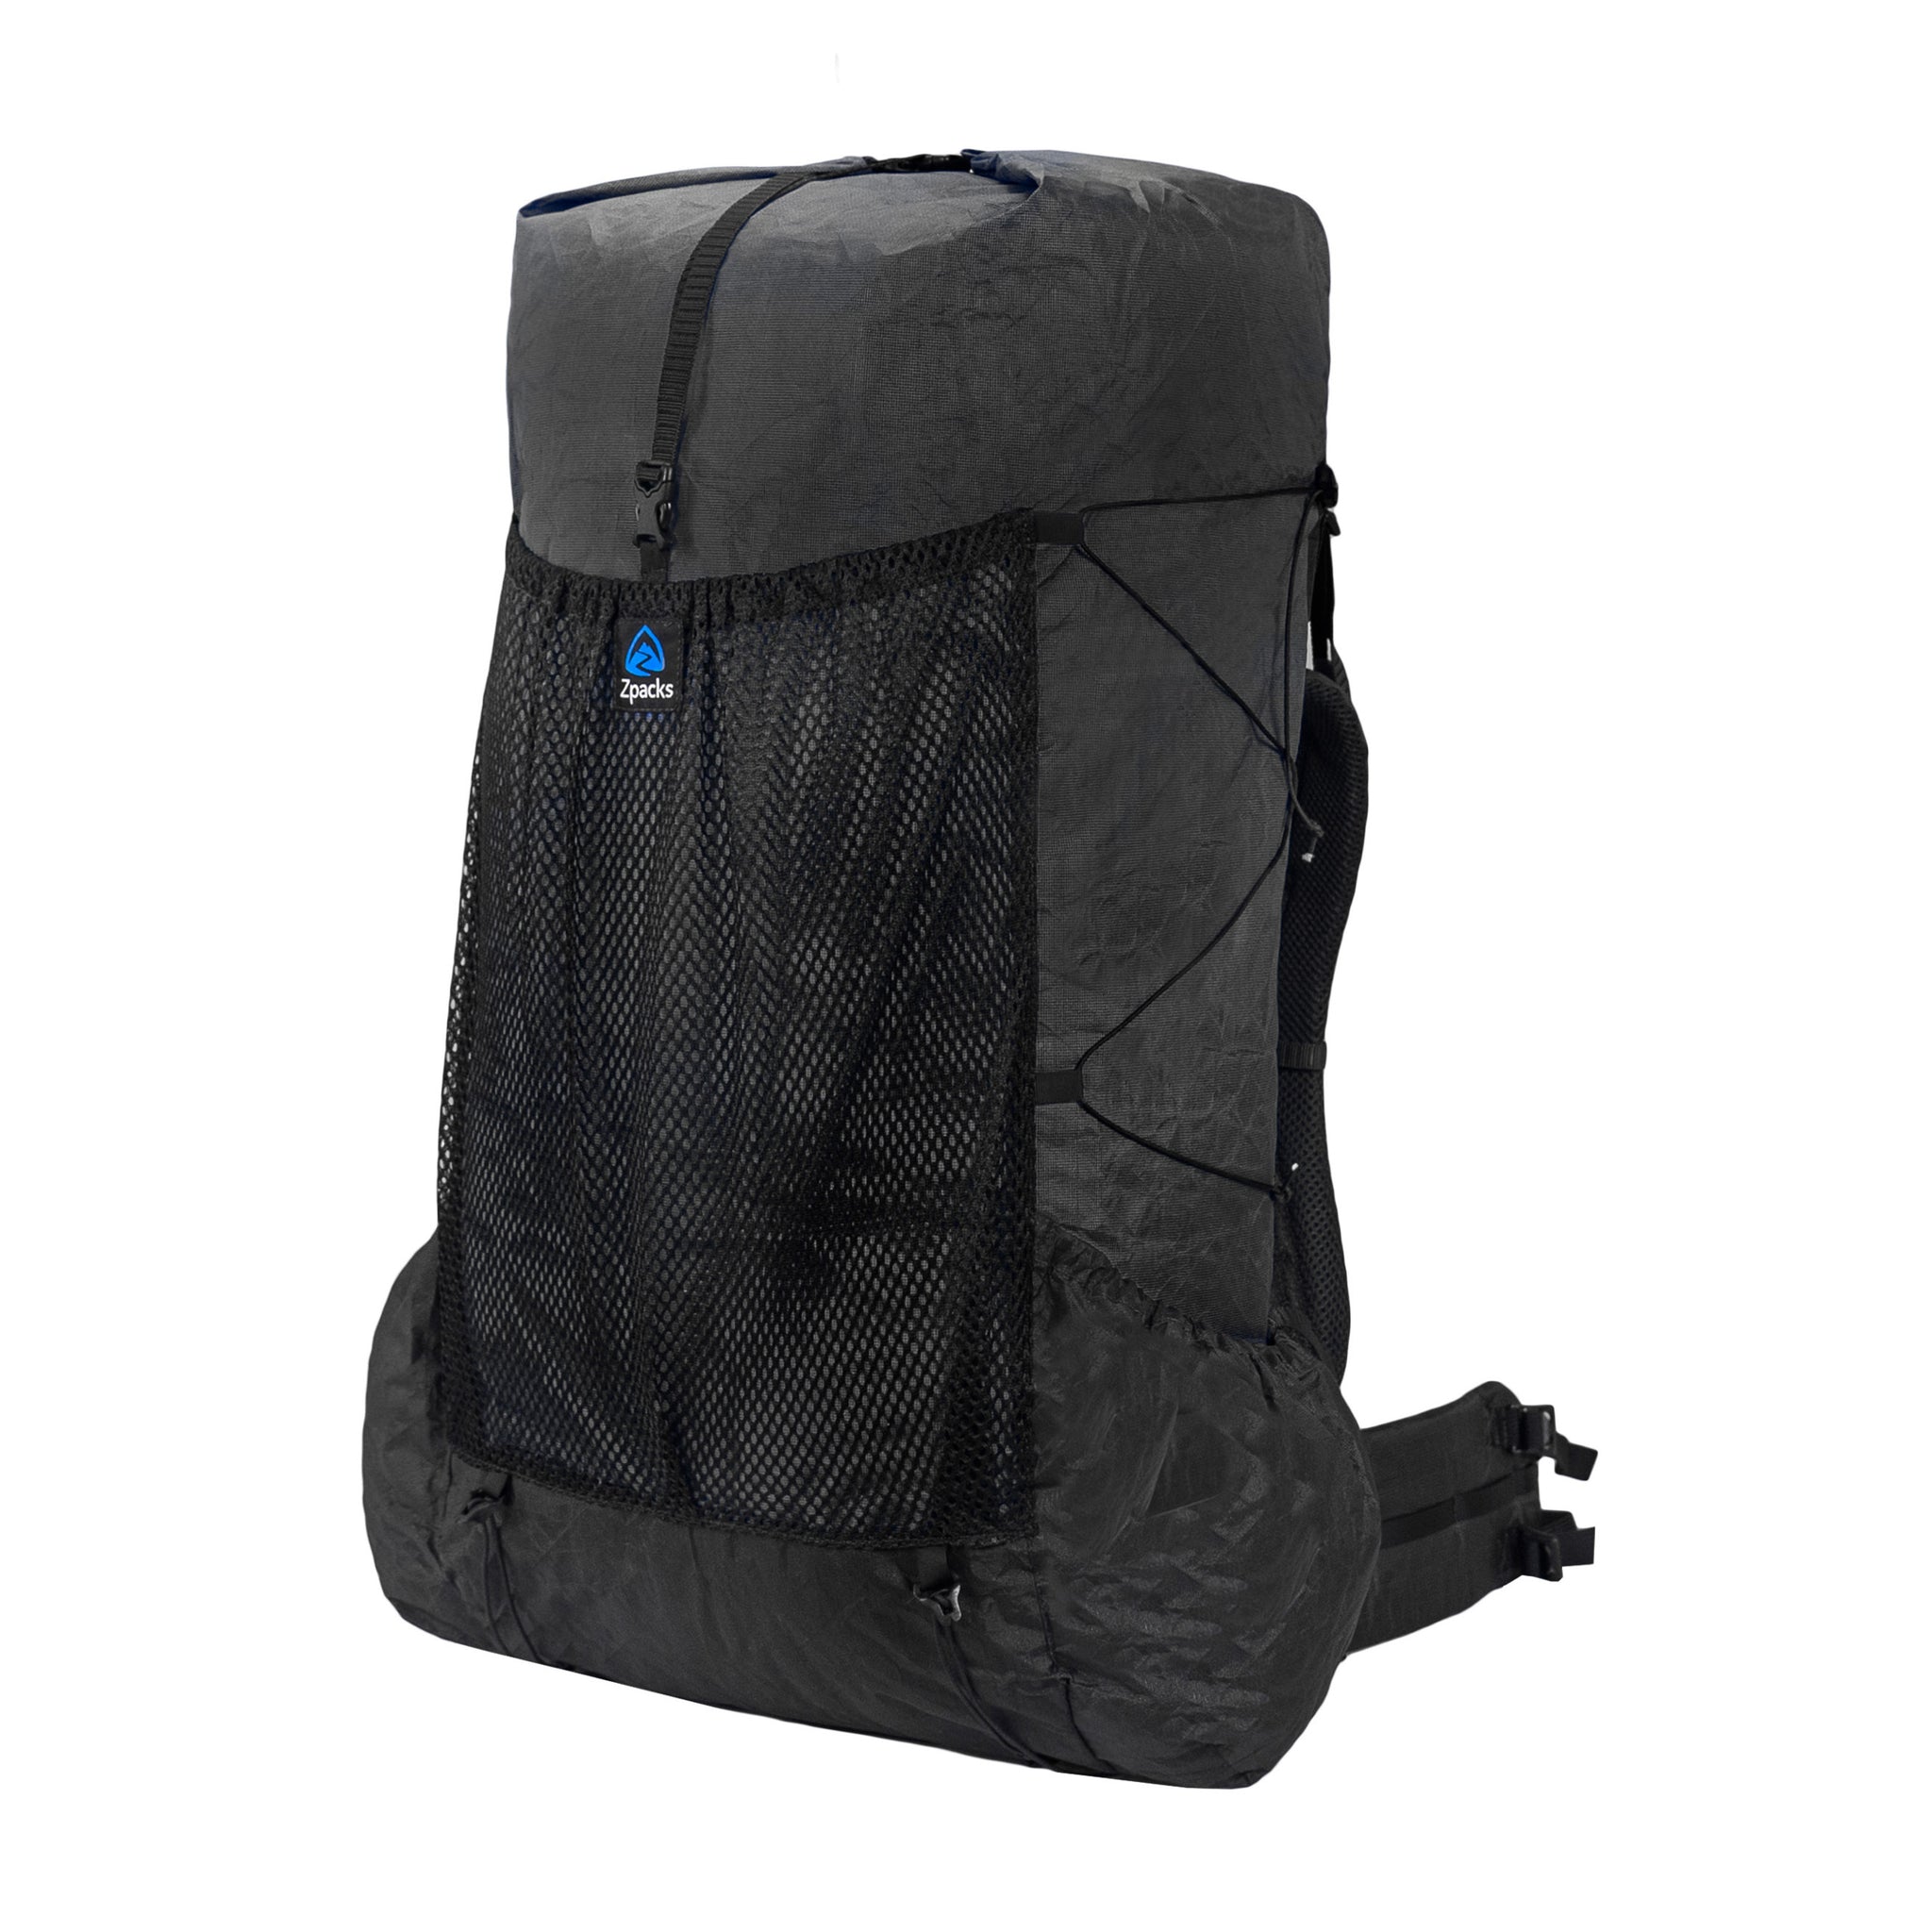 Black duffle bag/backpack online : r/Supreme